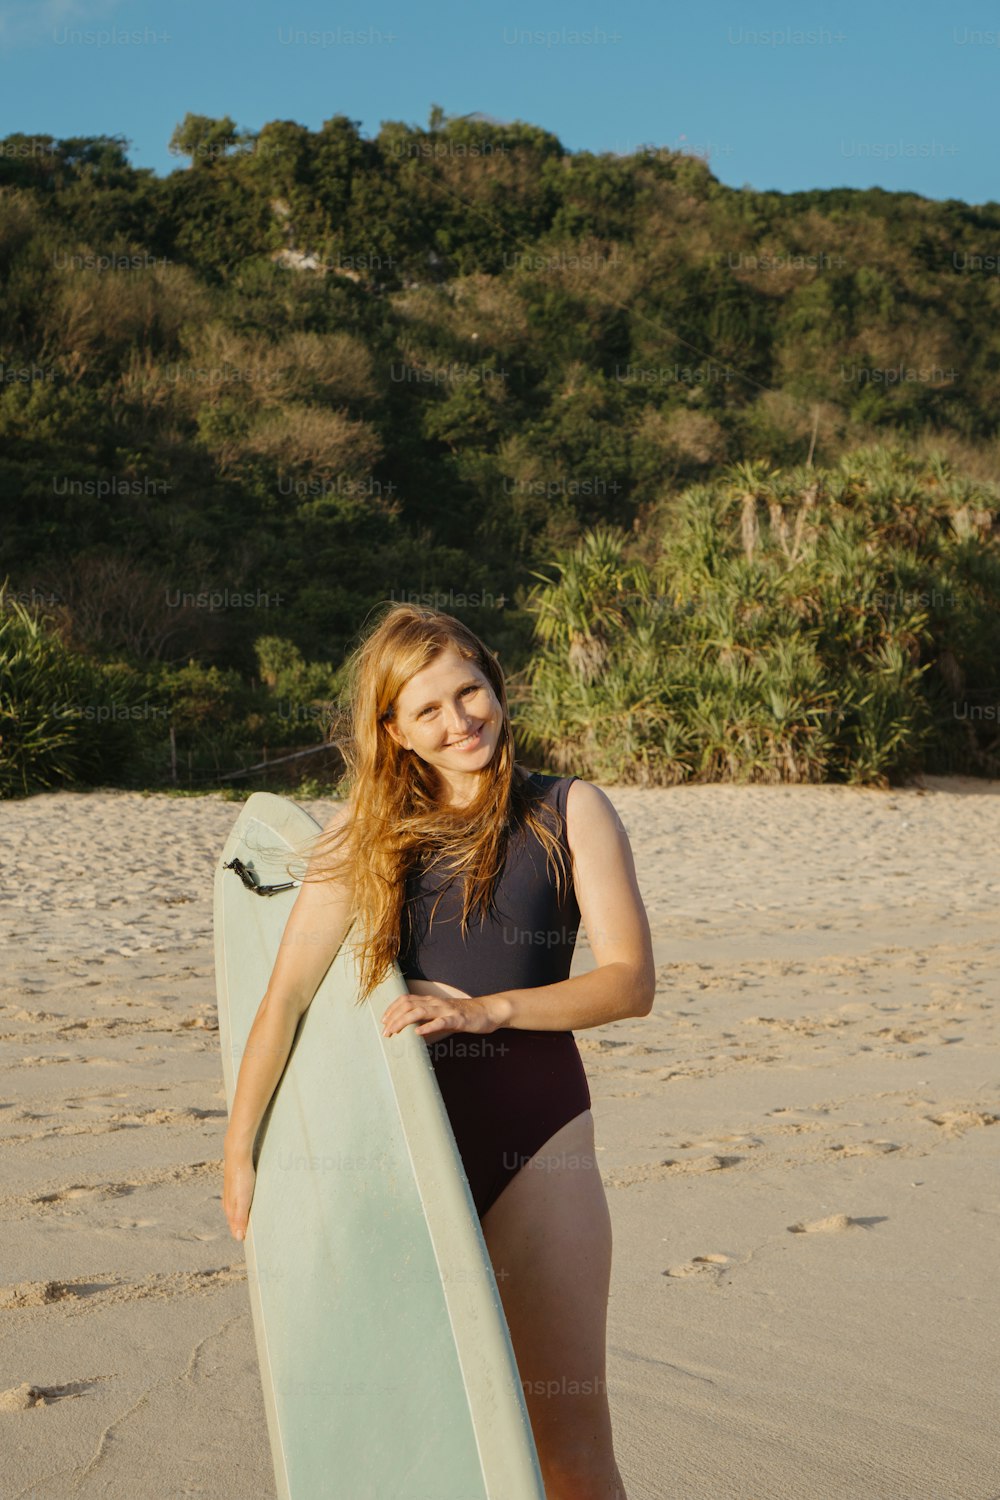 a woman holding a surfboard on a beach